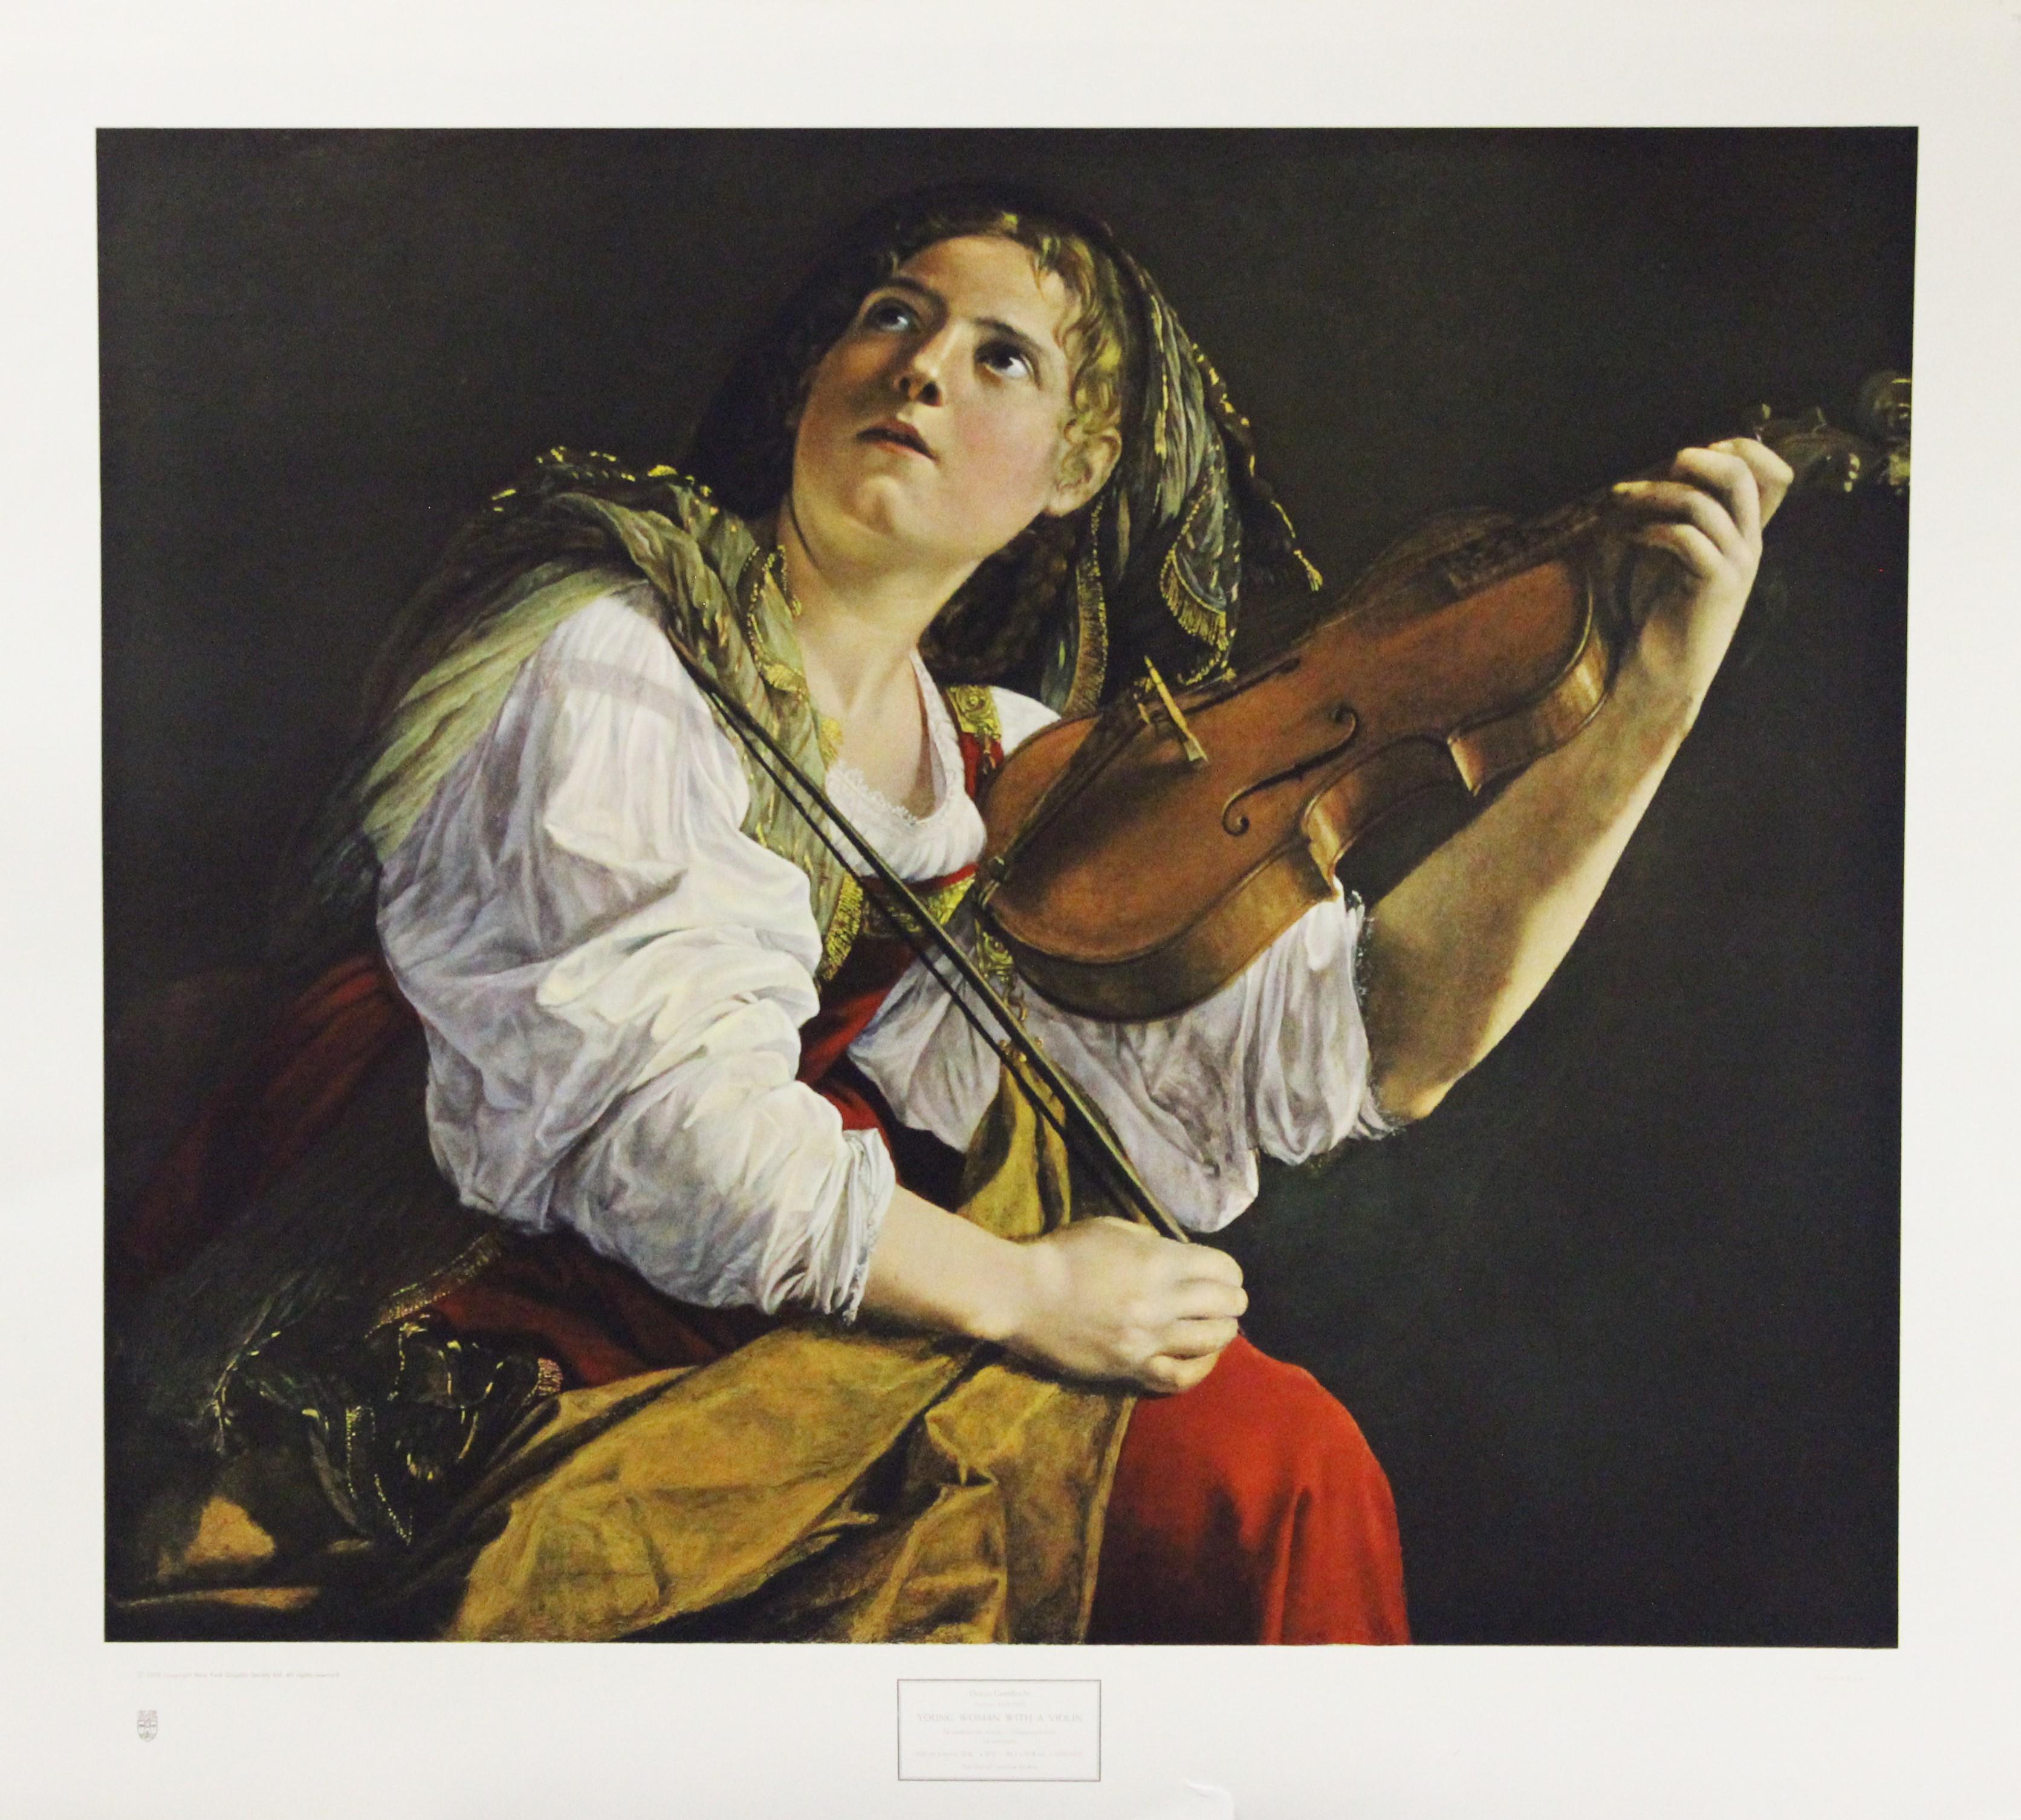 Orazio Gentileschi Portrait Print - Young Woman With A Violin-Poster. New York Graphic Society Ltd. 